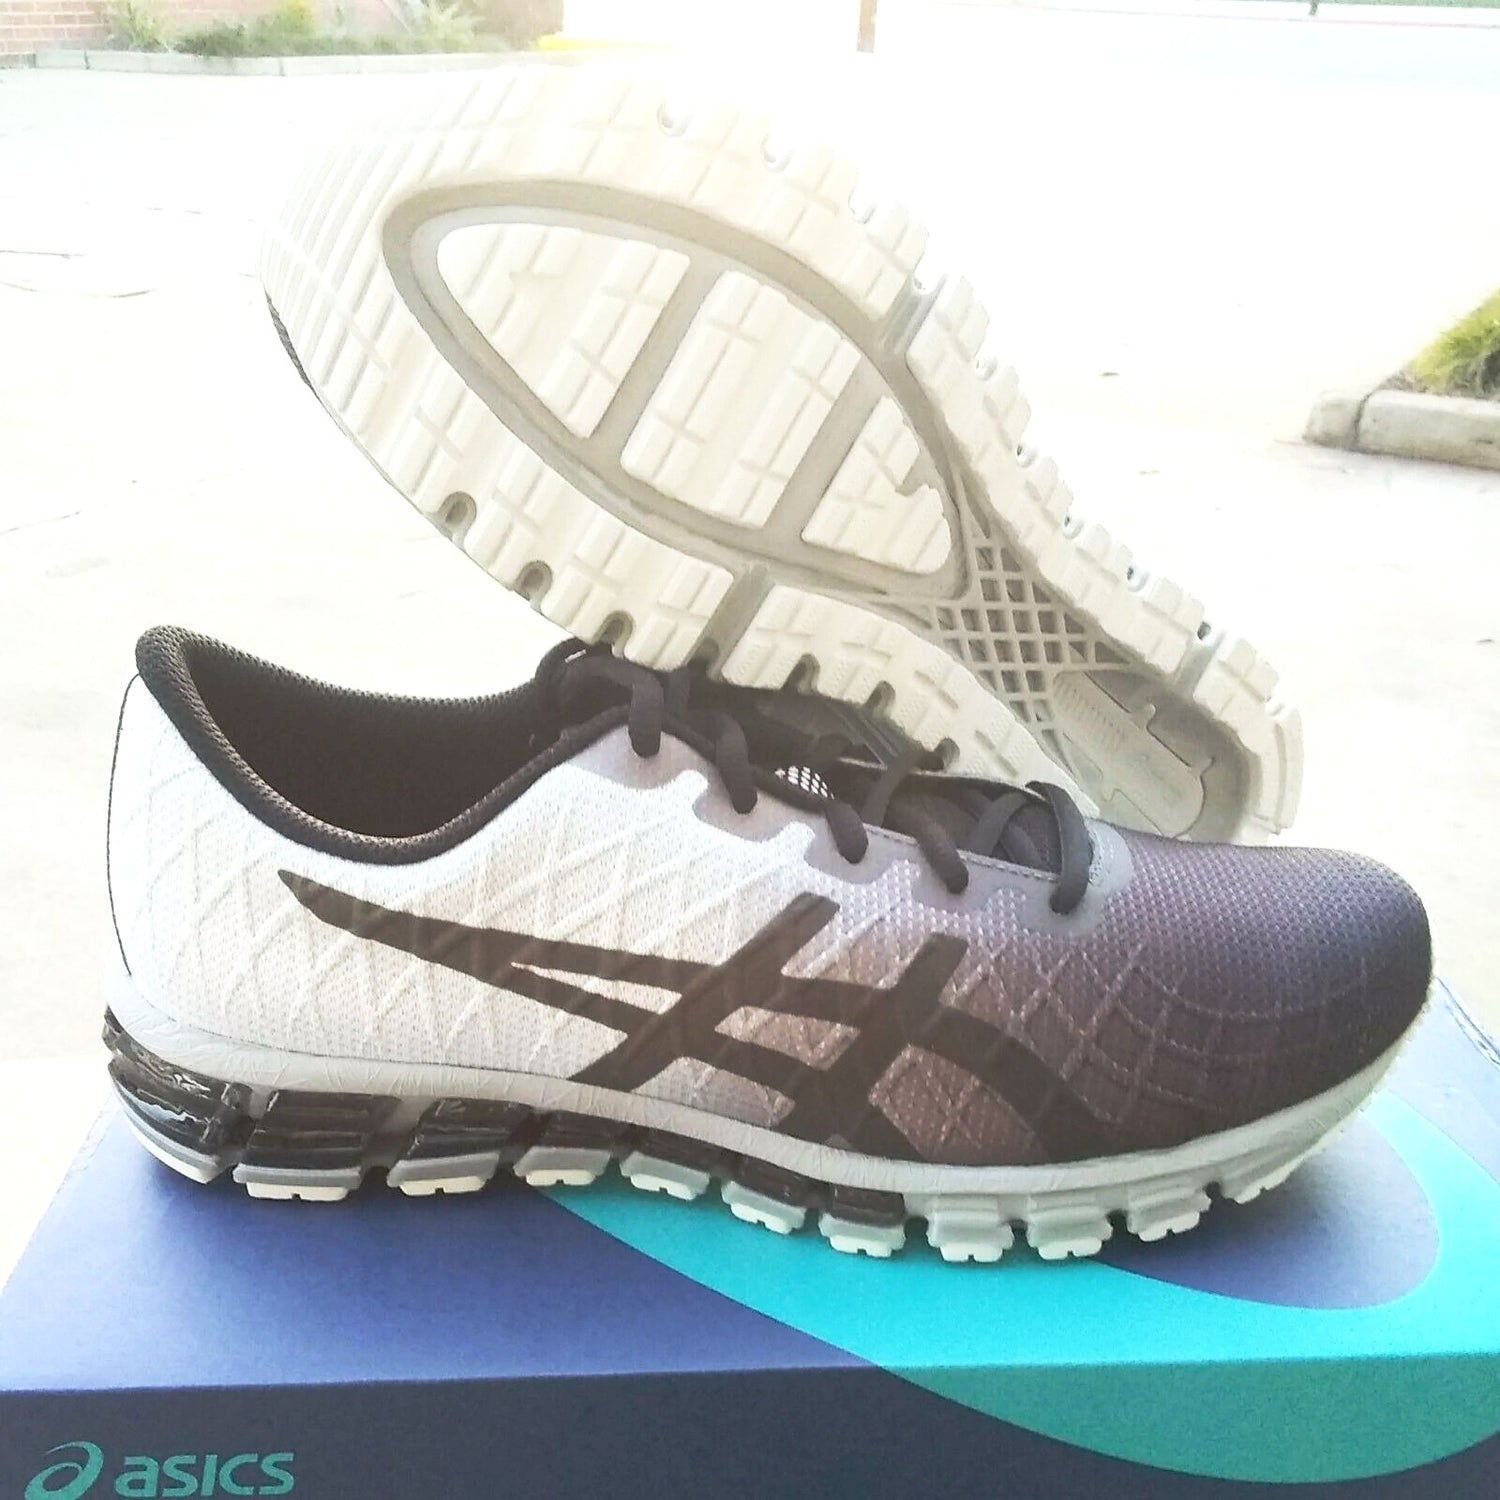 Asics men's Gel Quantum 180 4 Black White running shoes Size 11.5 US 